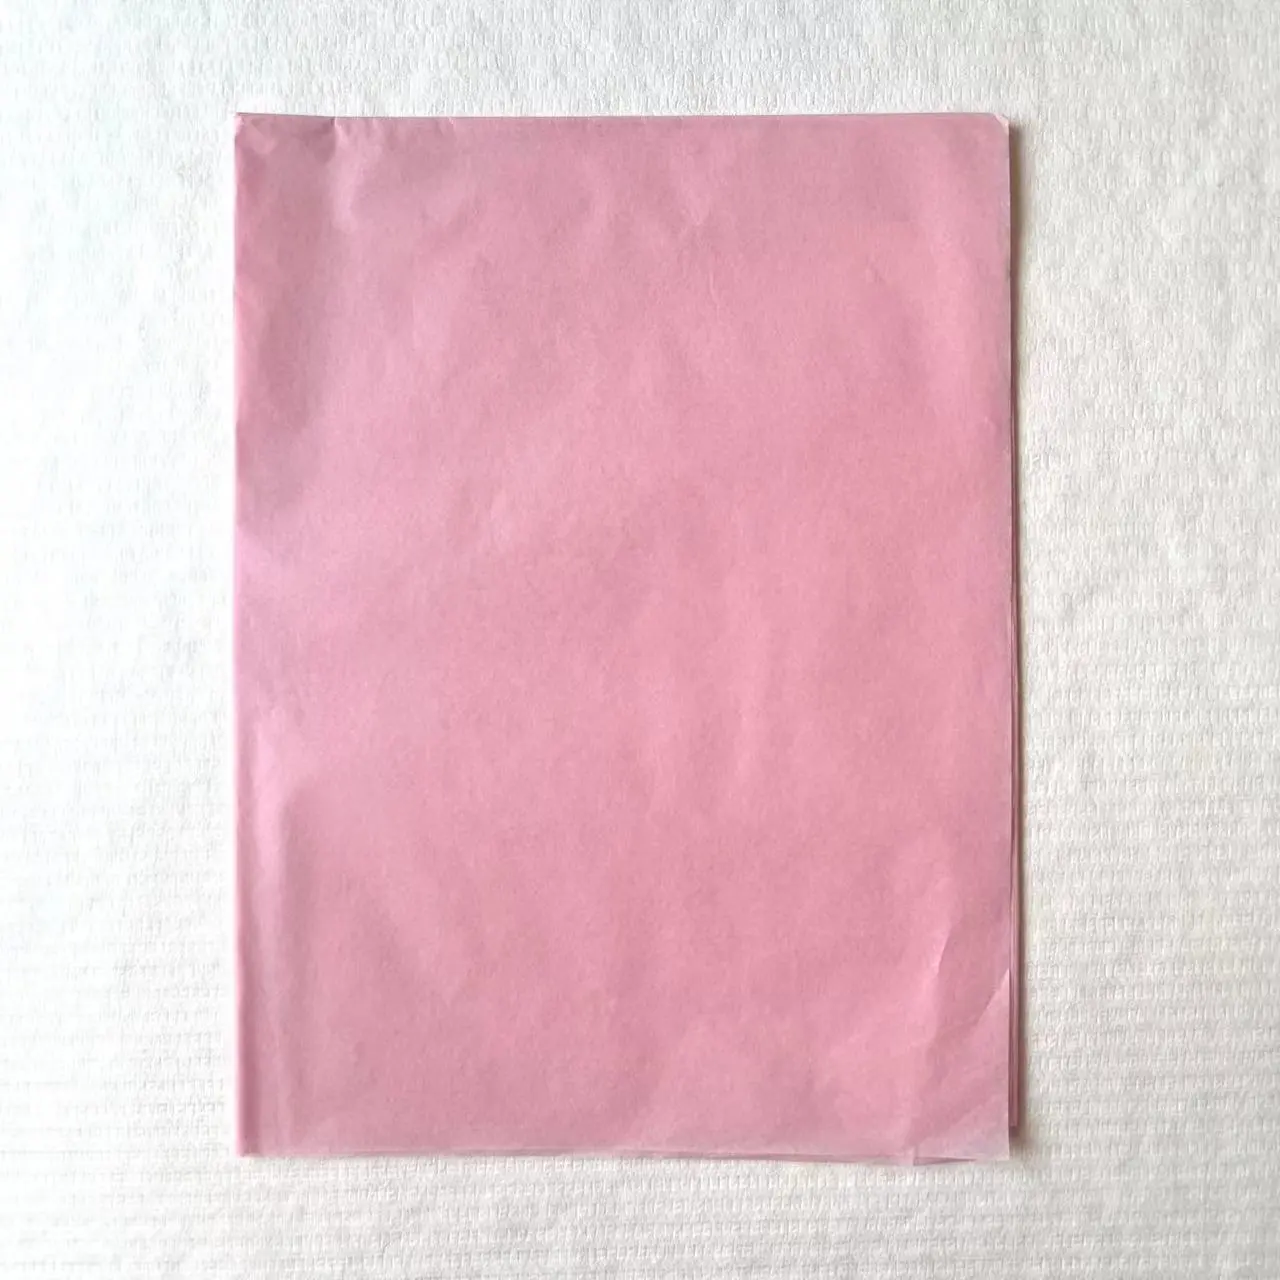 Kertas tisu berwarna merah muda mawar 17gsm 50*75cm 1 kertas pembungkus kemasan karton kertas tisu pabrik whosale